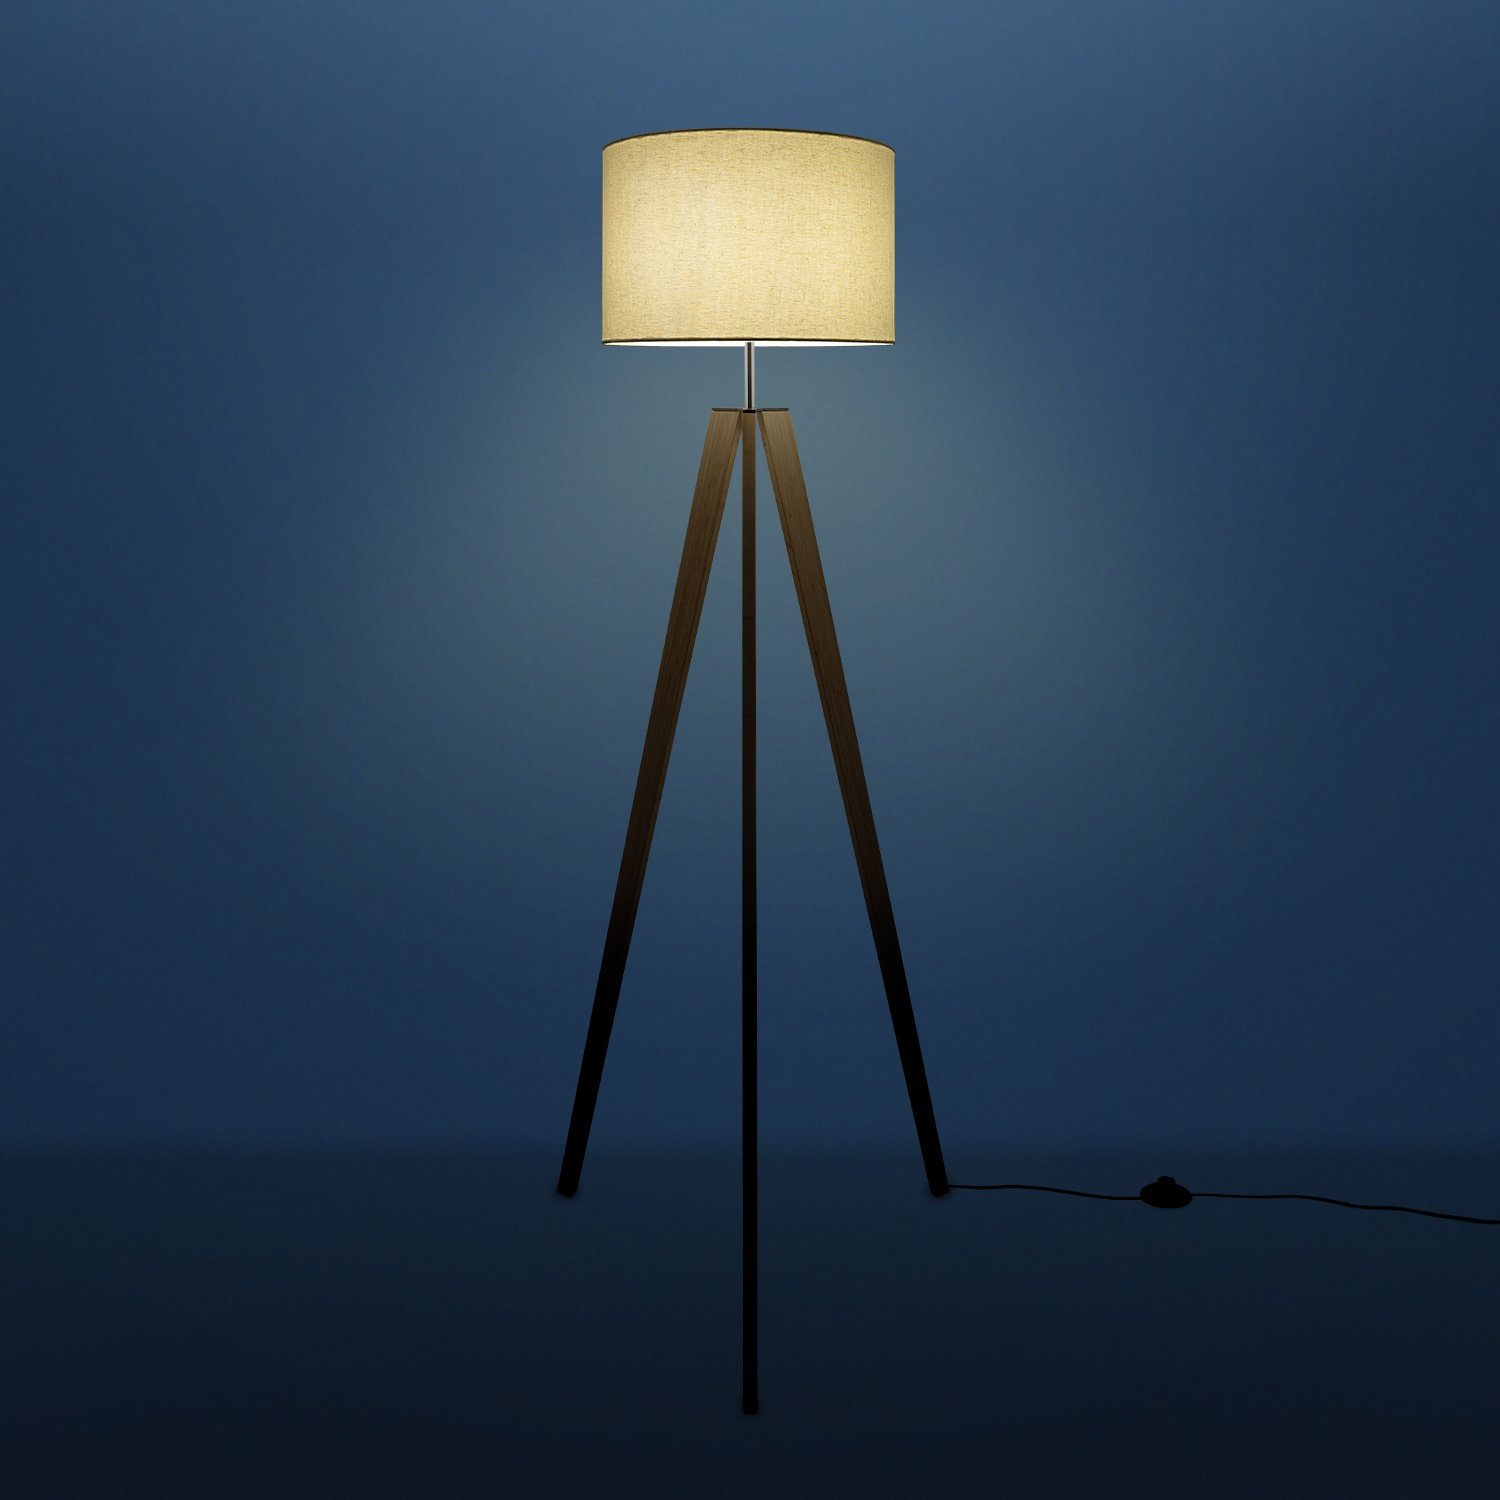 Paco Home Lampe Stehlampe E27 Stehlampe Vintage Skandinavischer Stil ohne LED Fuß uni Wohnzimmer Canvas Leuchtmittel, Color